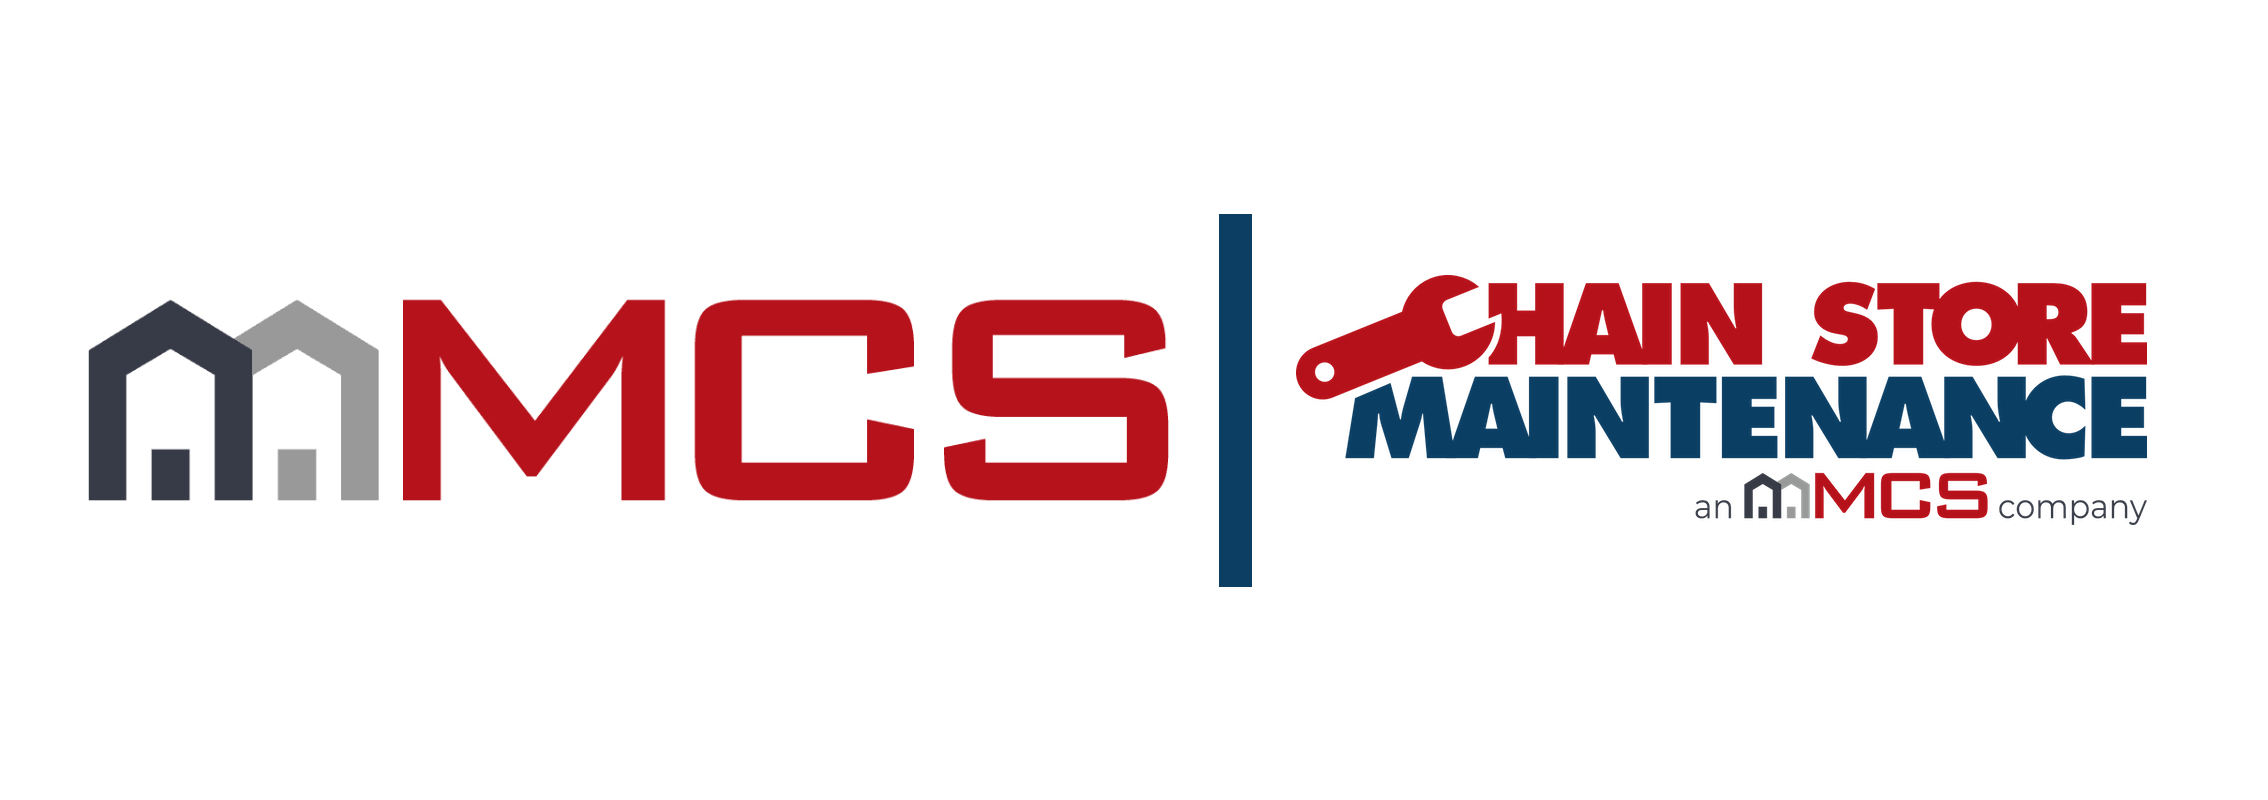 MCS & Chain Store Maintenance Joint Logo